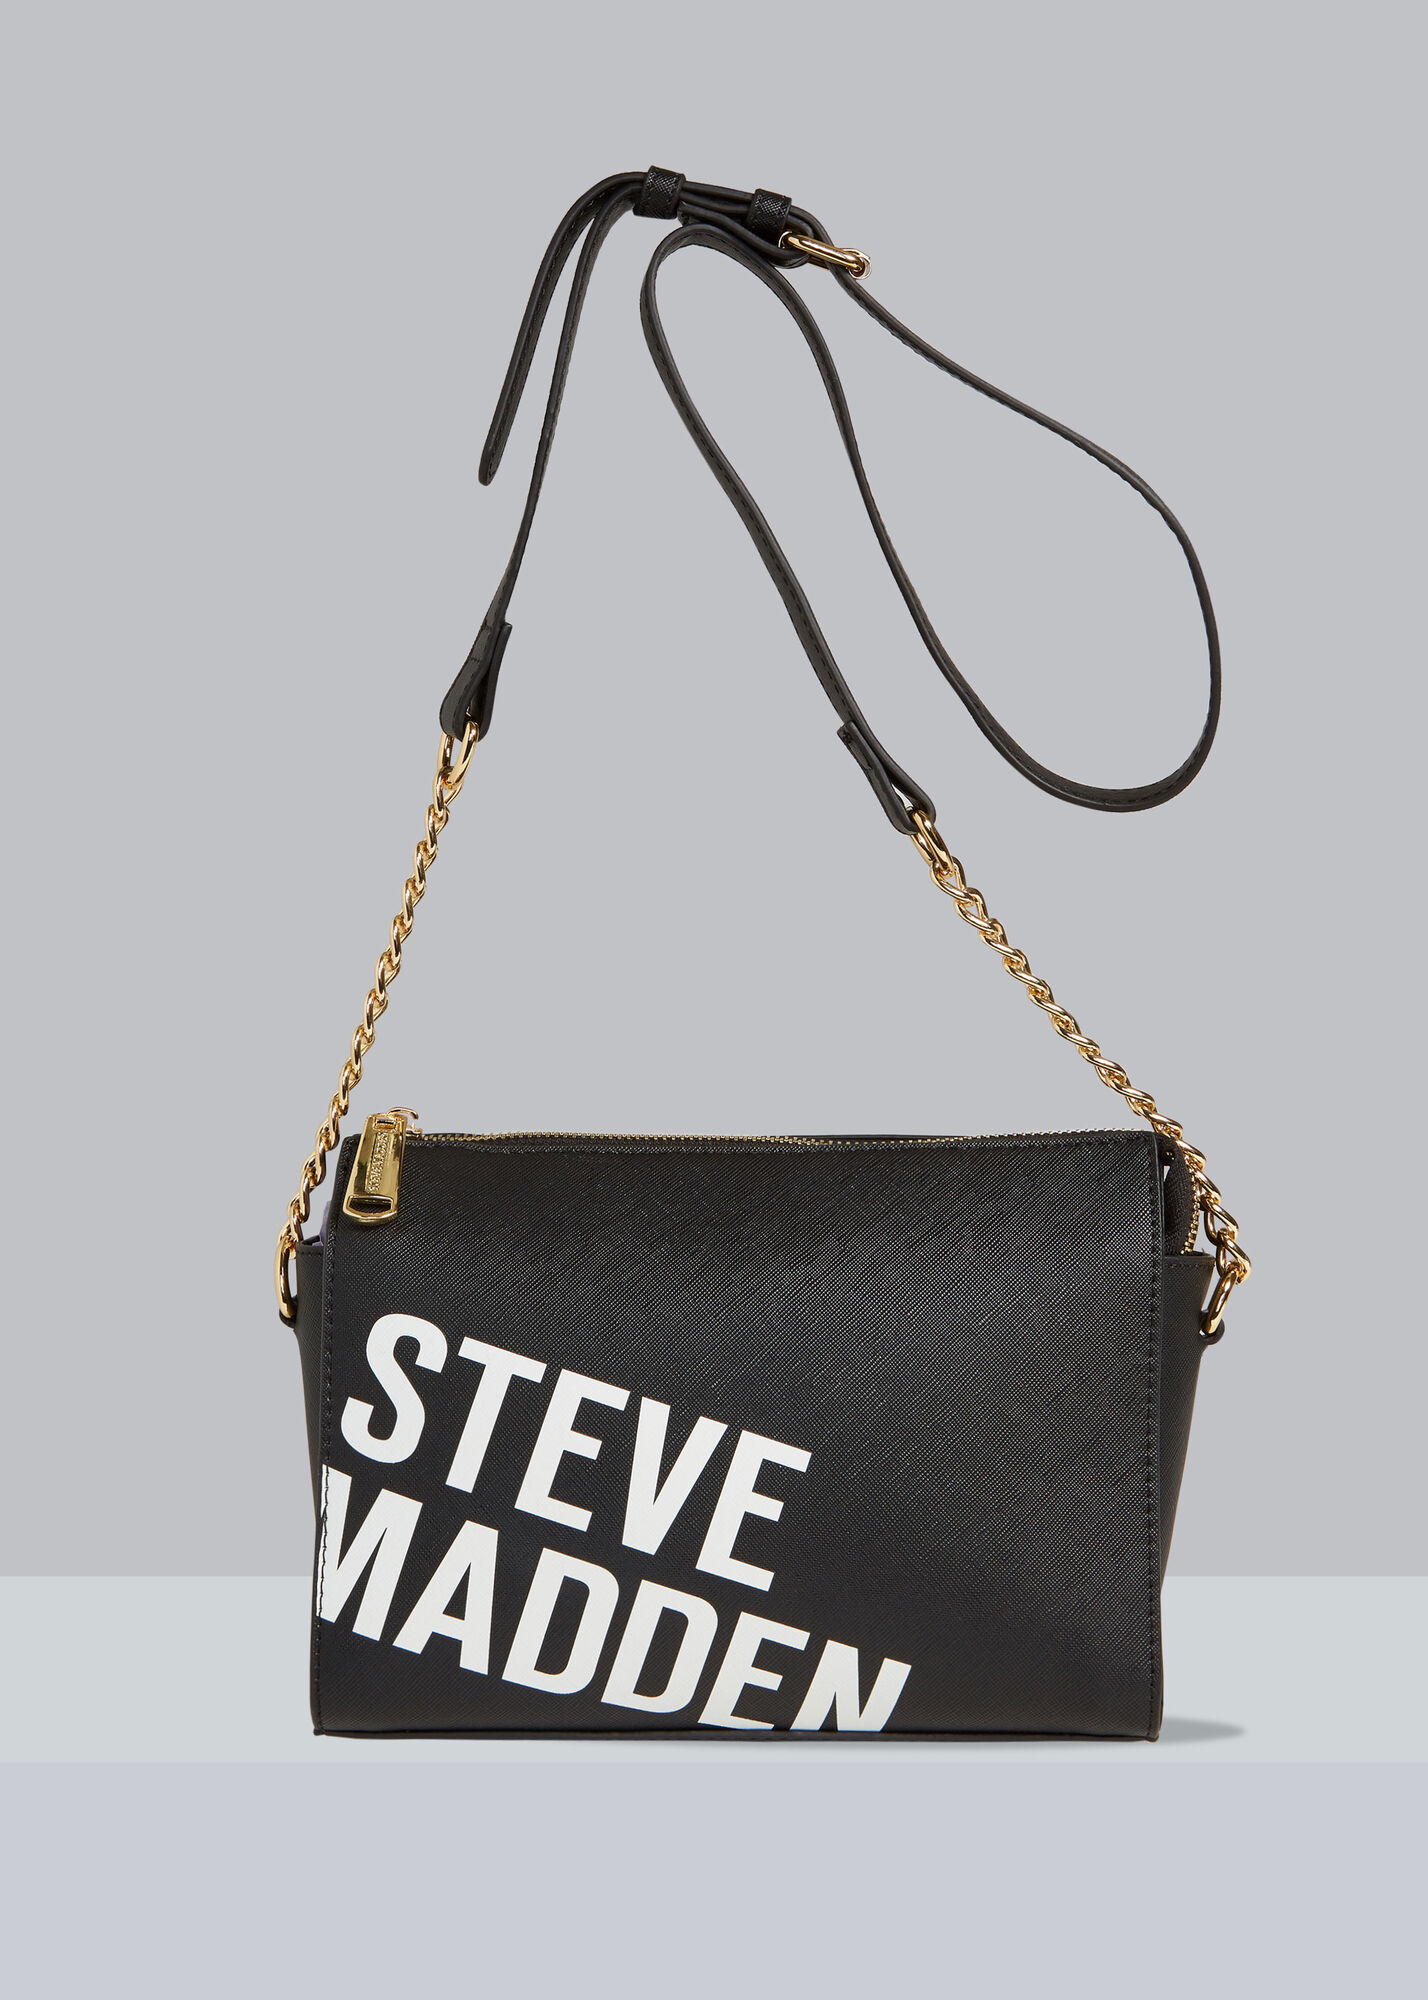 Steve Madden Purse! . Website: Ashleygabrielle.com